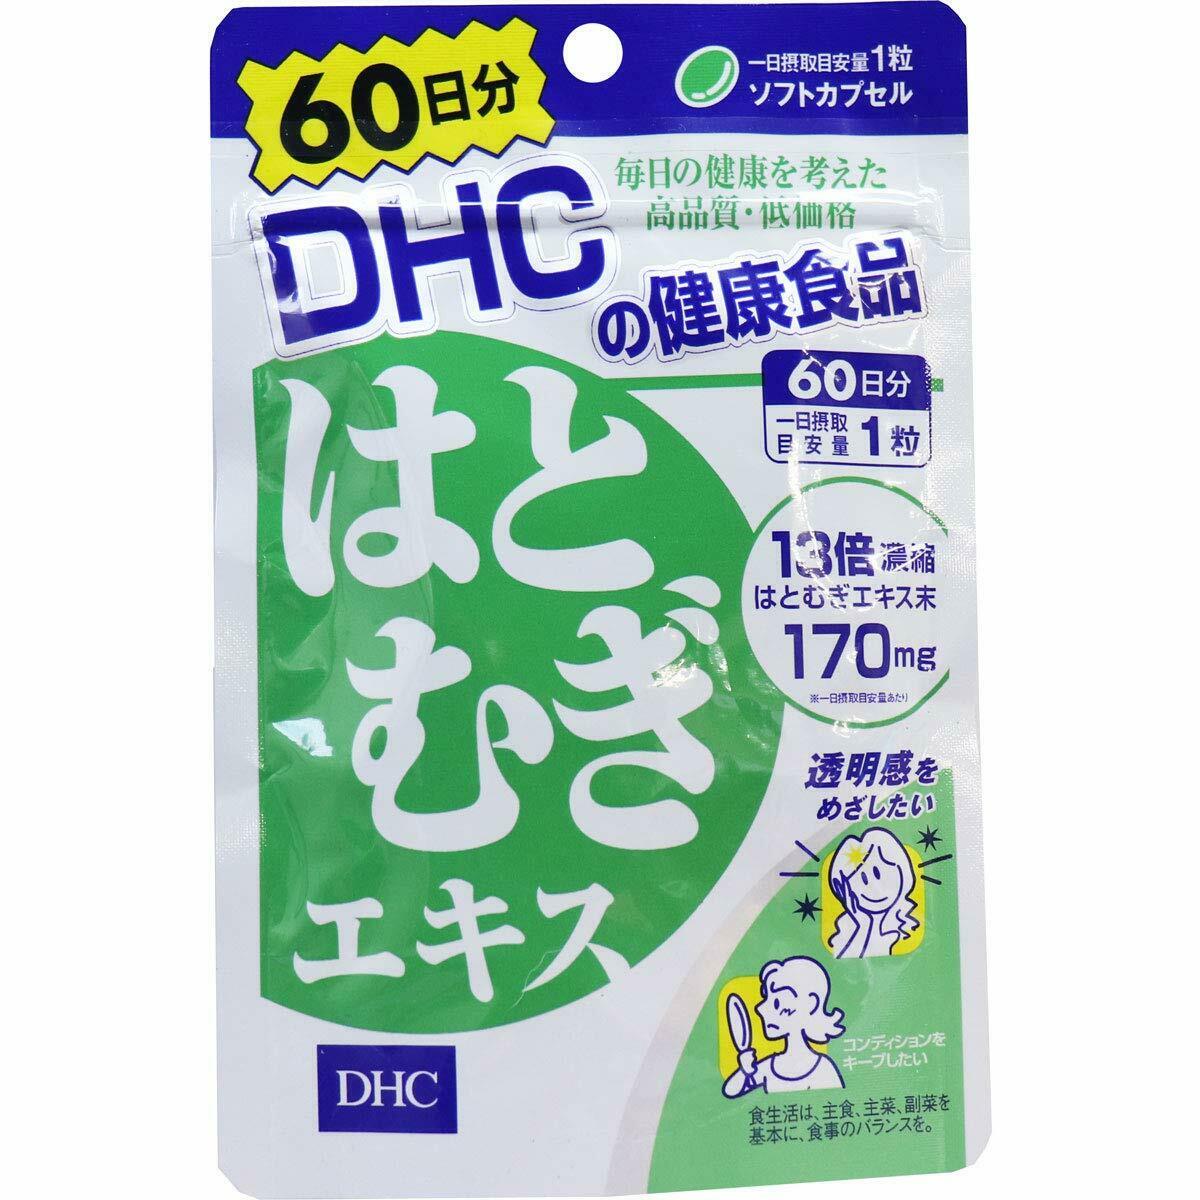 DHC Hatomogi Extract Supplement Job's Tears / Adlay [60 days] 60 tablets